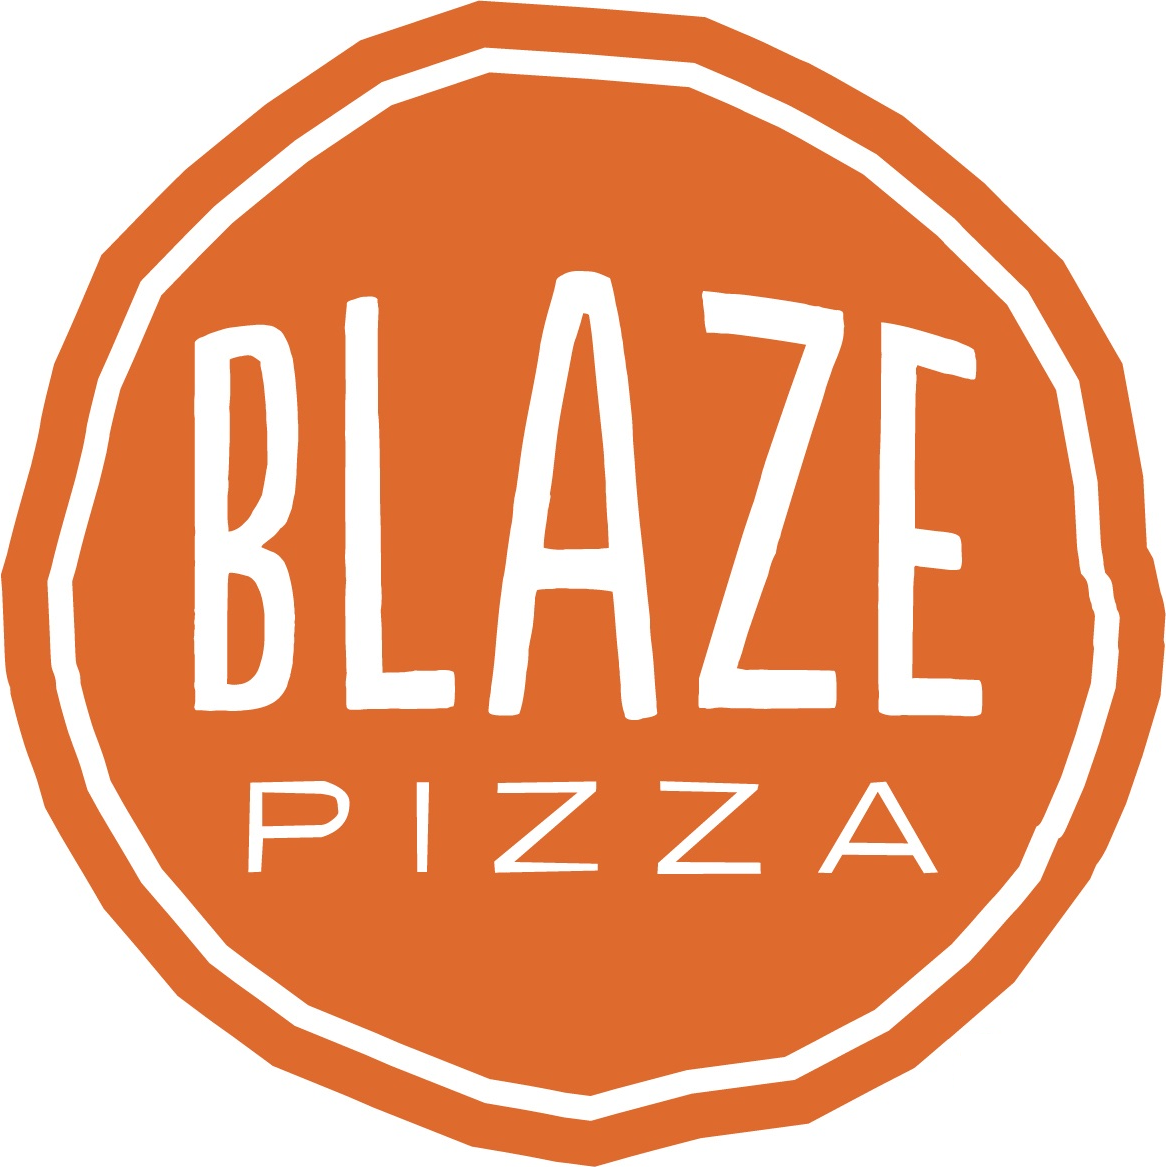 Blaze Pizza - Wikipedia